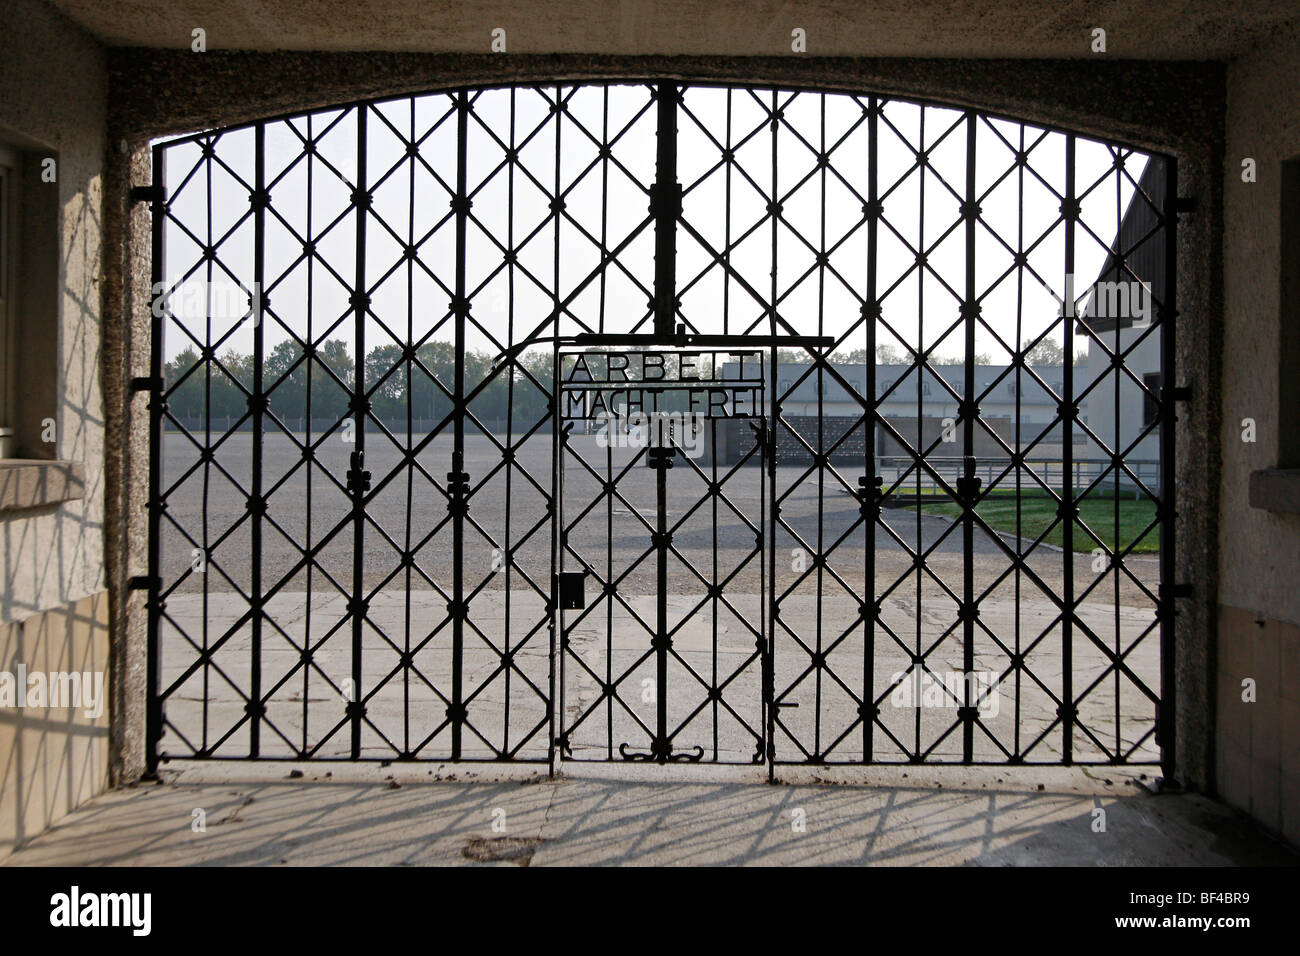 Arbeit macht frei, Dachau Concentration Camp Memorial Site, Dachau, Bavaria, Germany, Europe Stock Photo